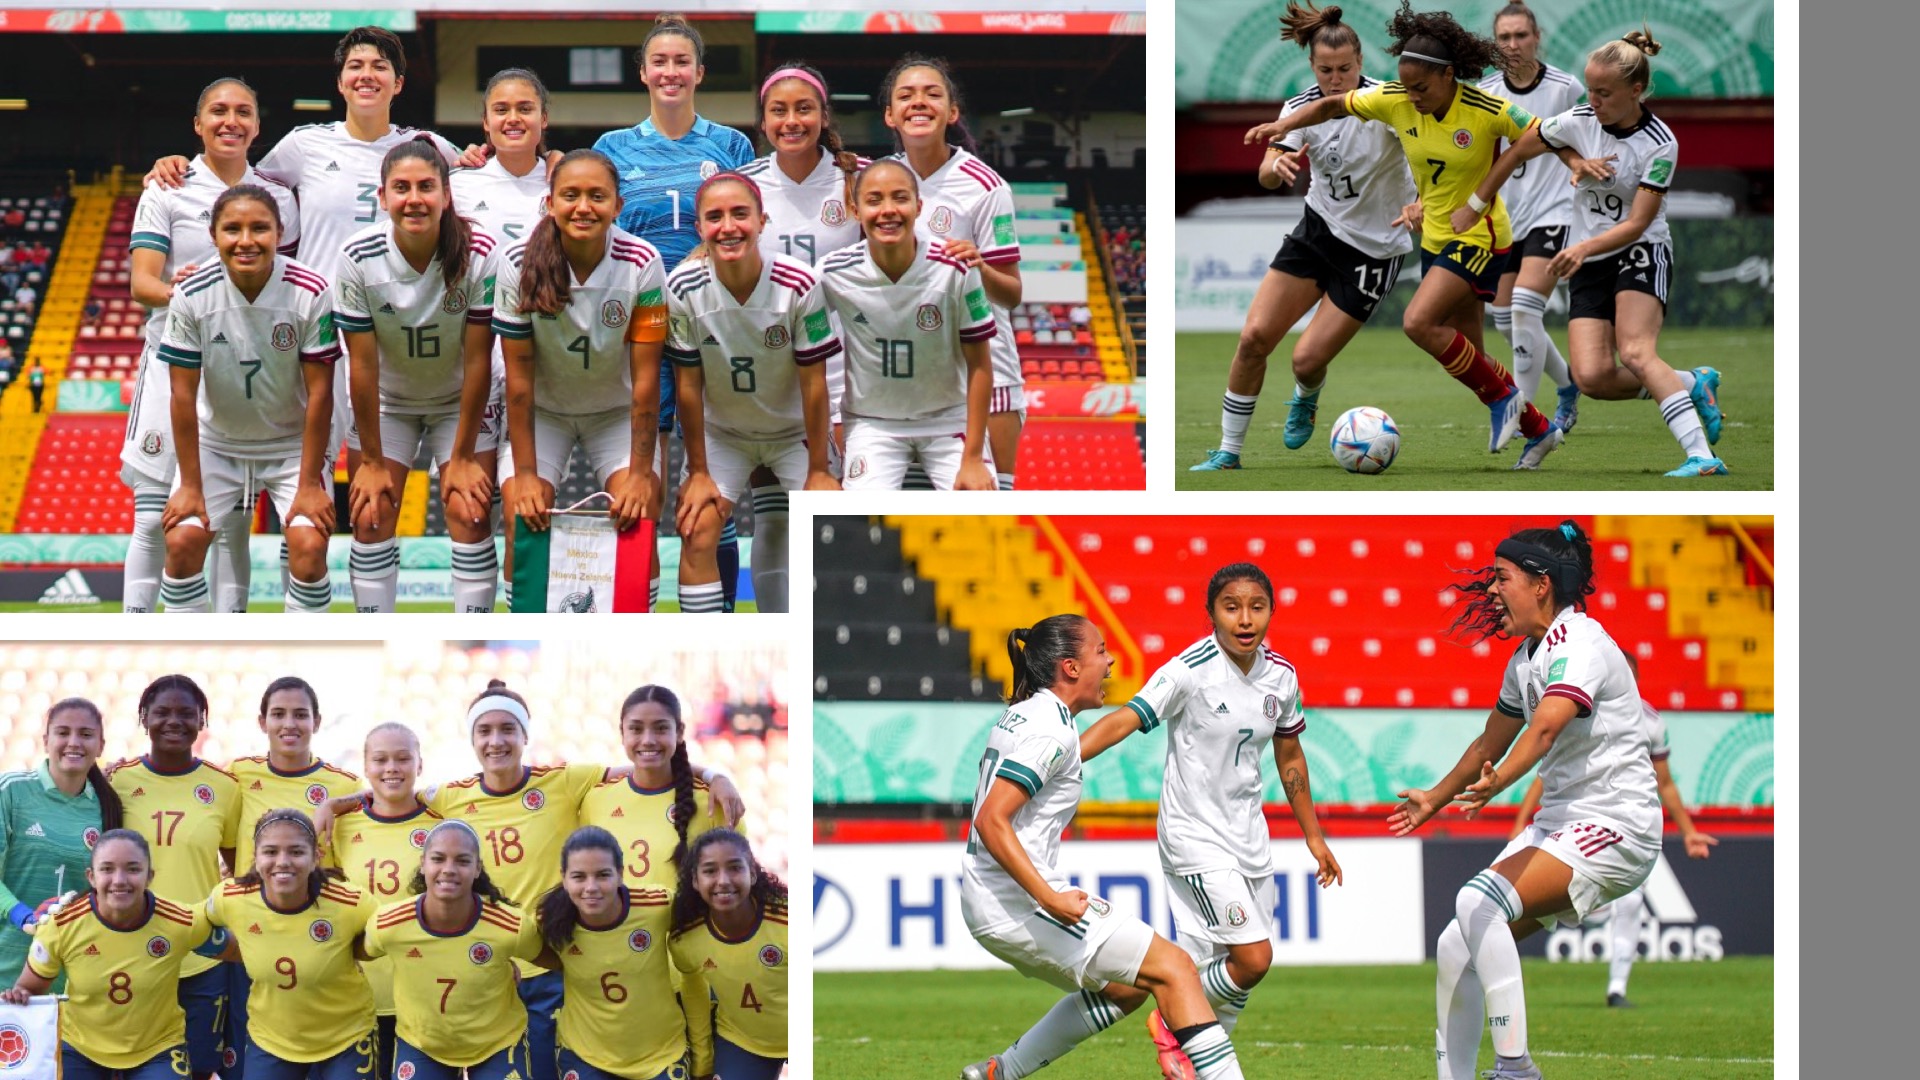 México vs. Colombia (fecha 2 del grupo B) en la Copa del Mundo Femenina Sub-20